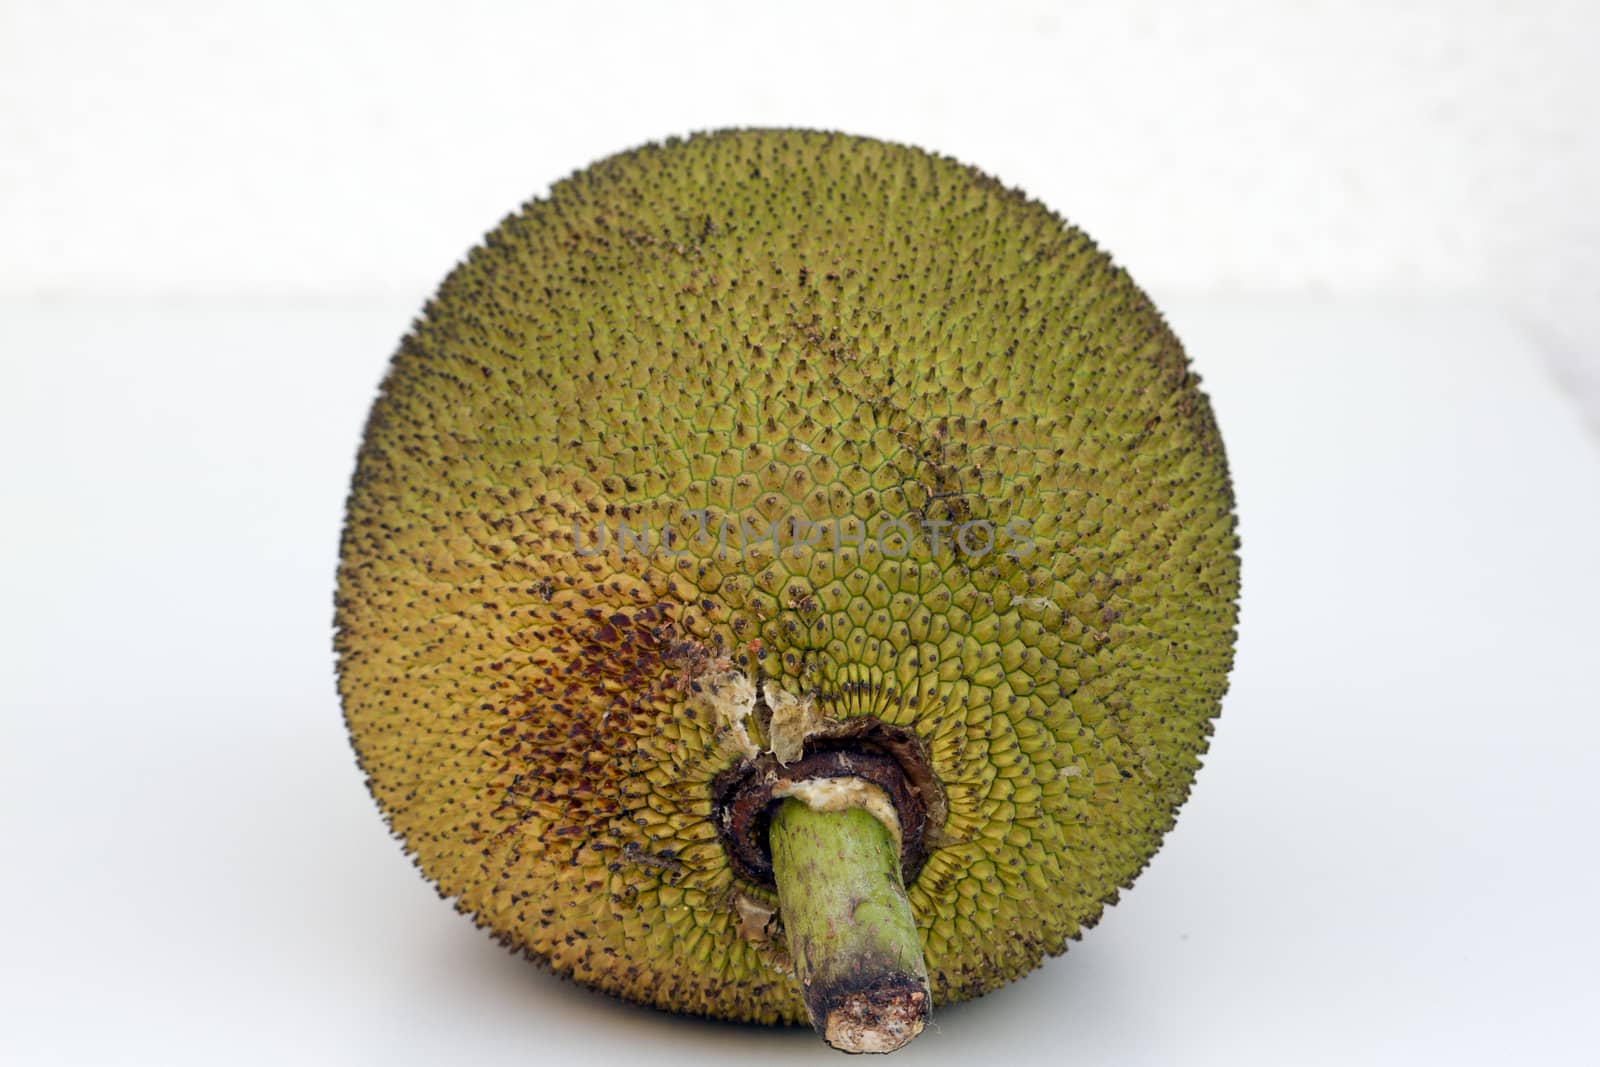 Giant jackfruit of South East Asia India Goa.